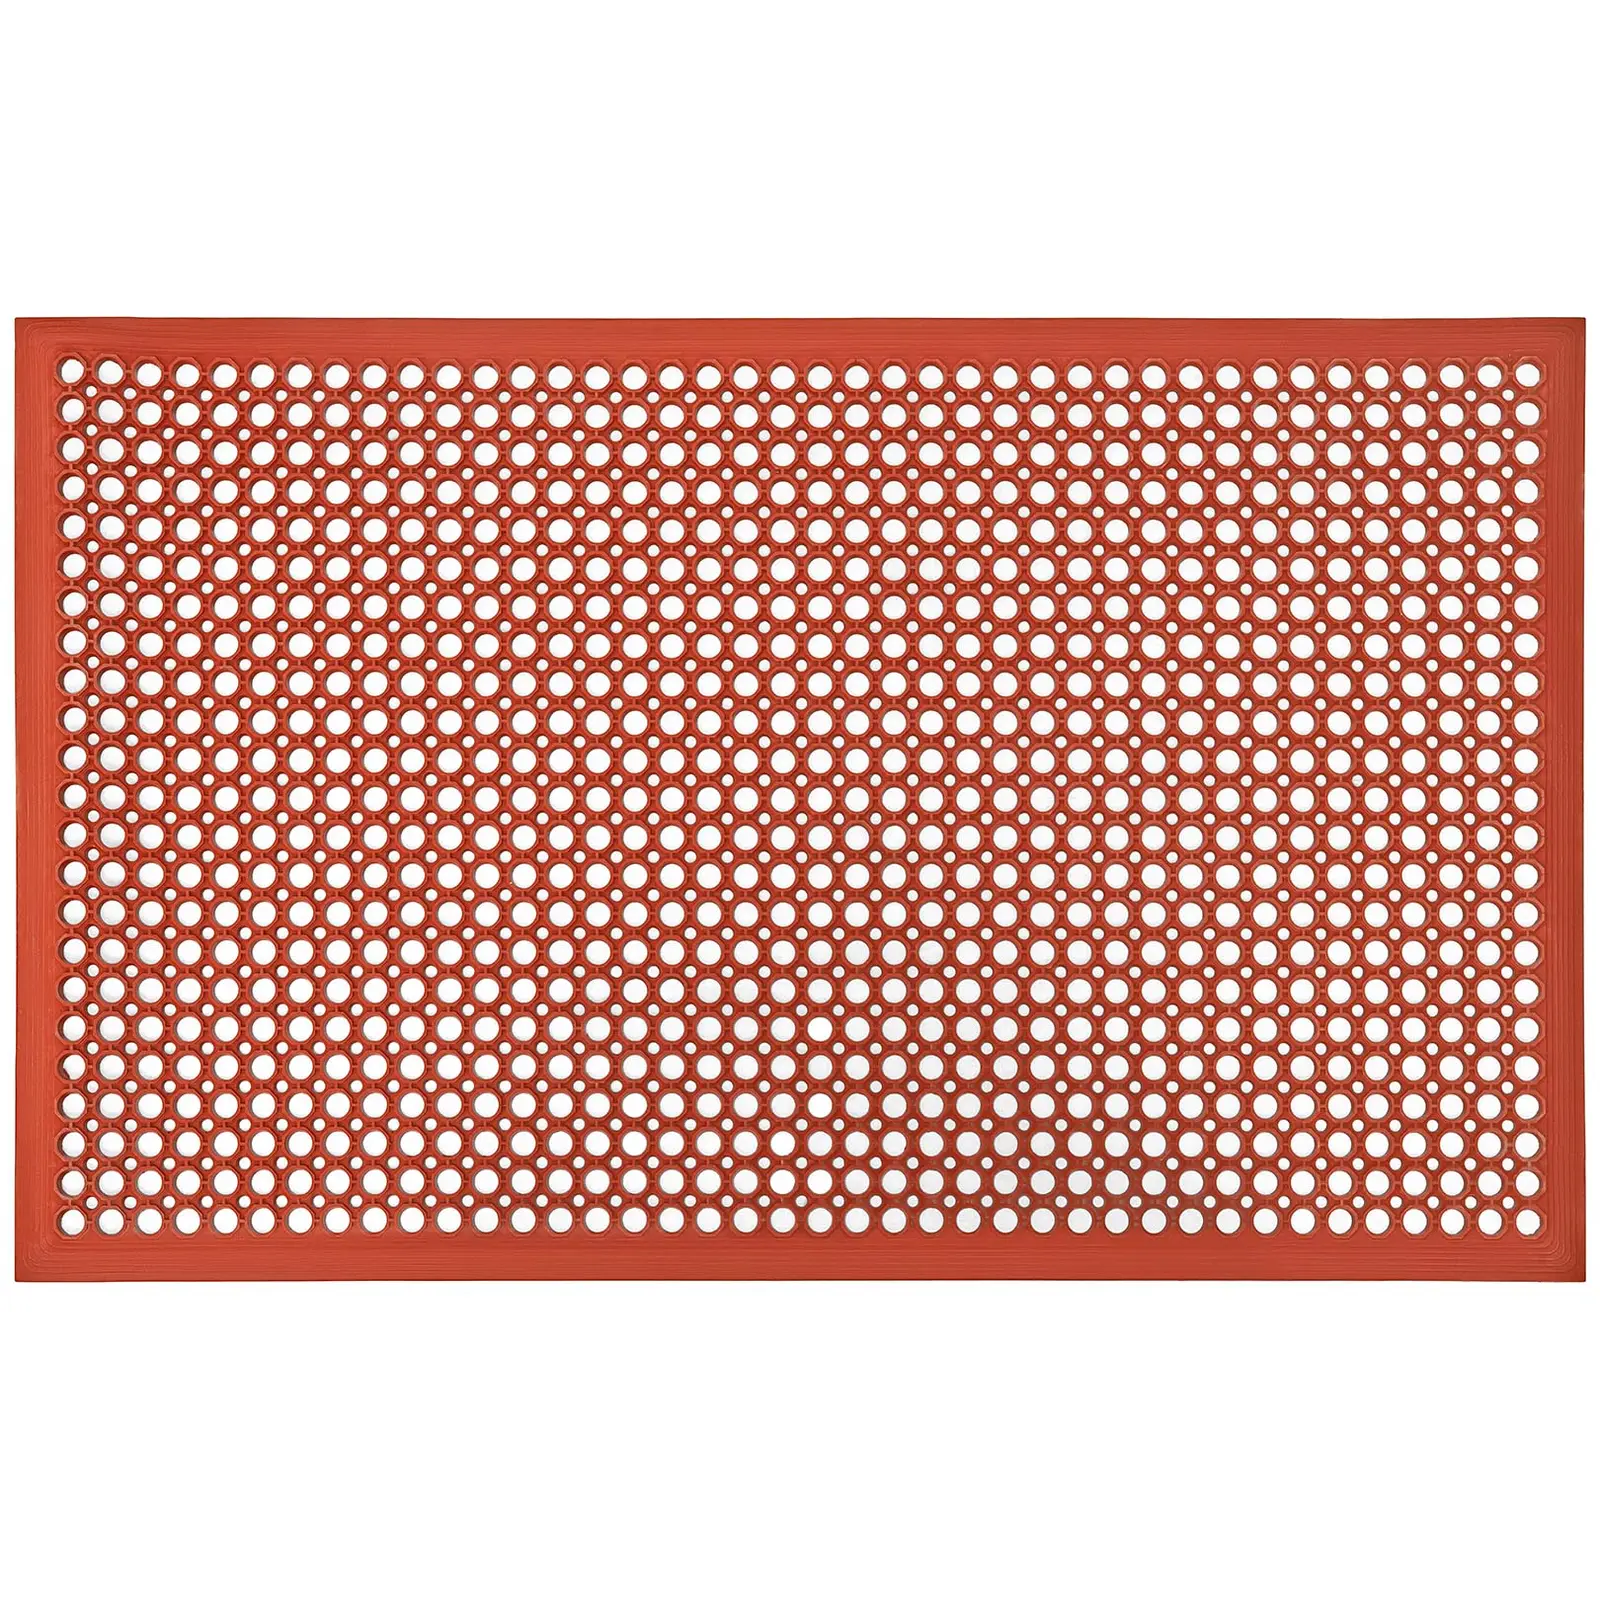 Mata gumowa - 153 x 92 x 1 cm - czerwona